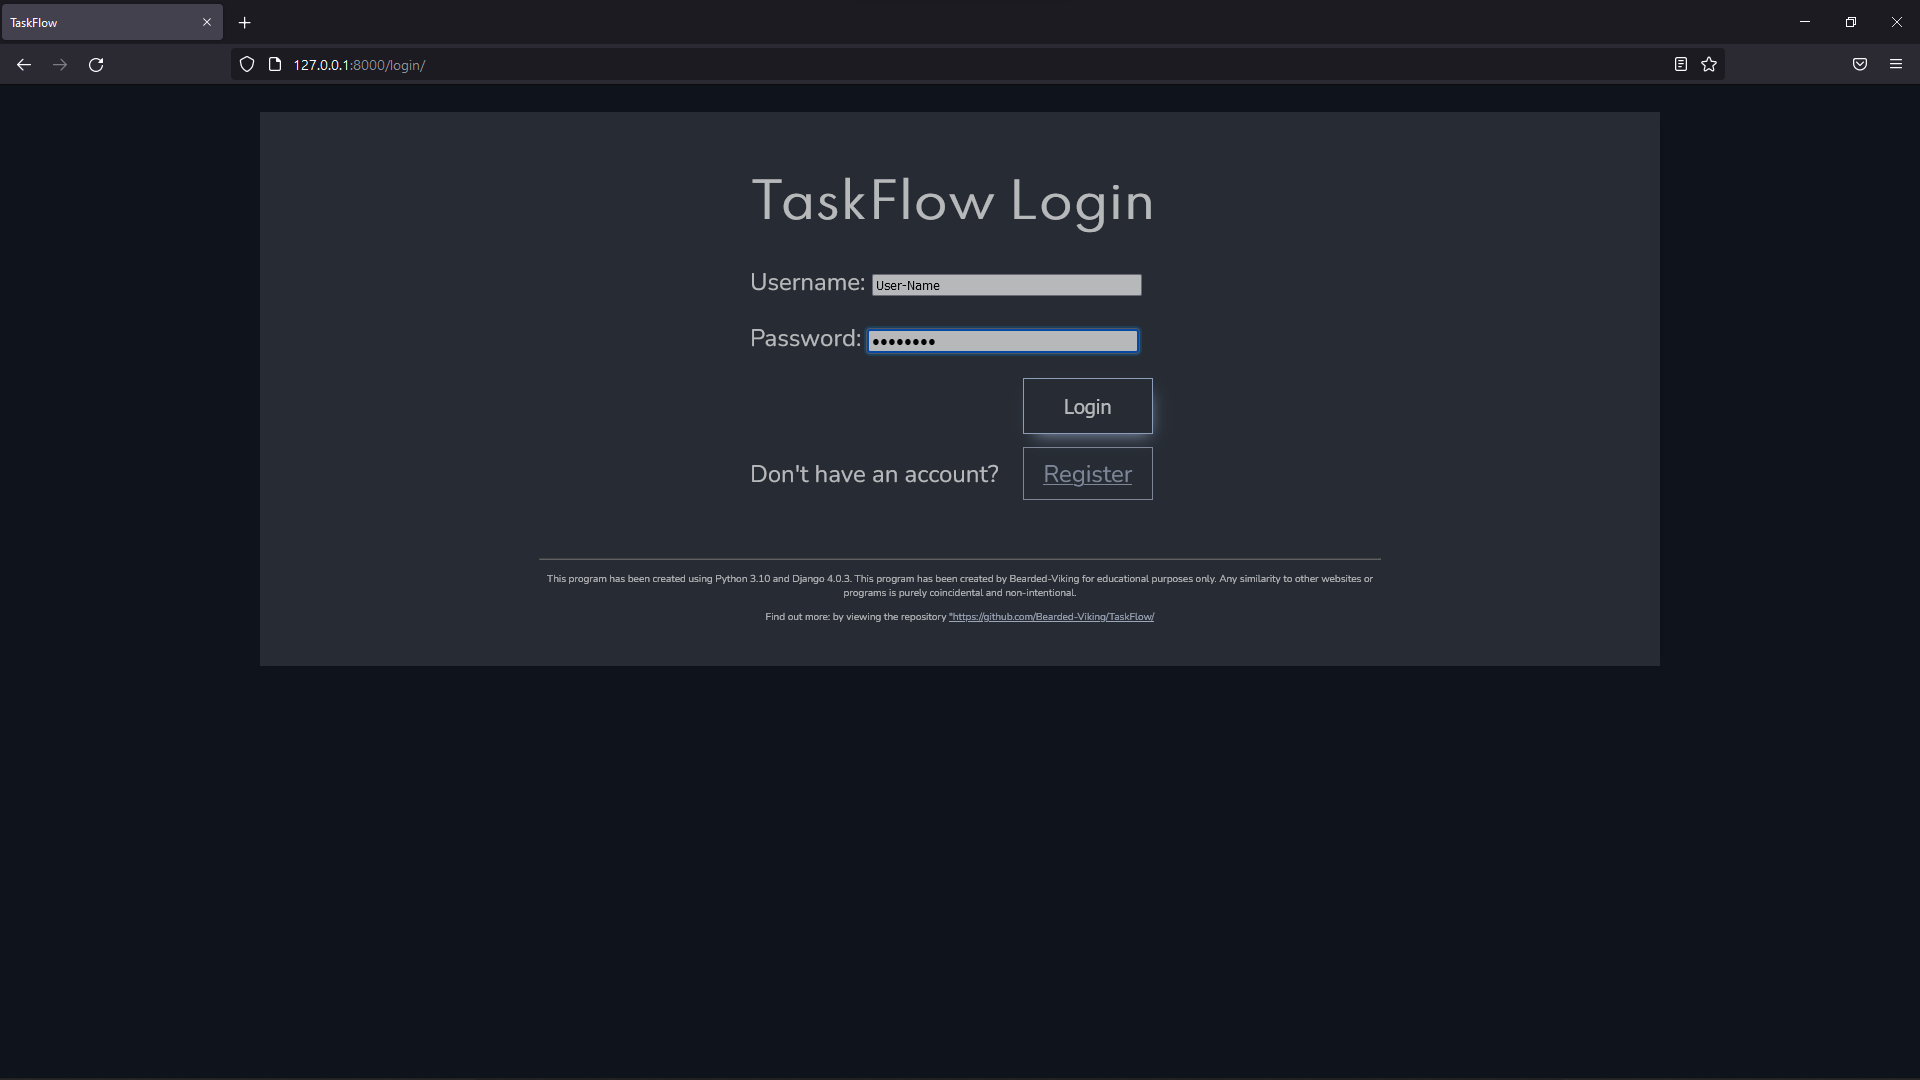 TaskFlow Login